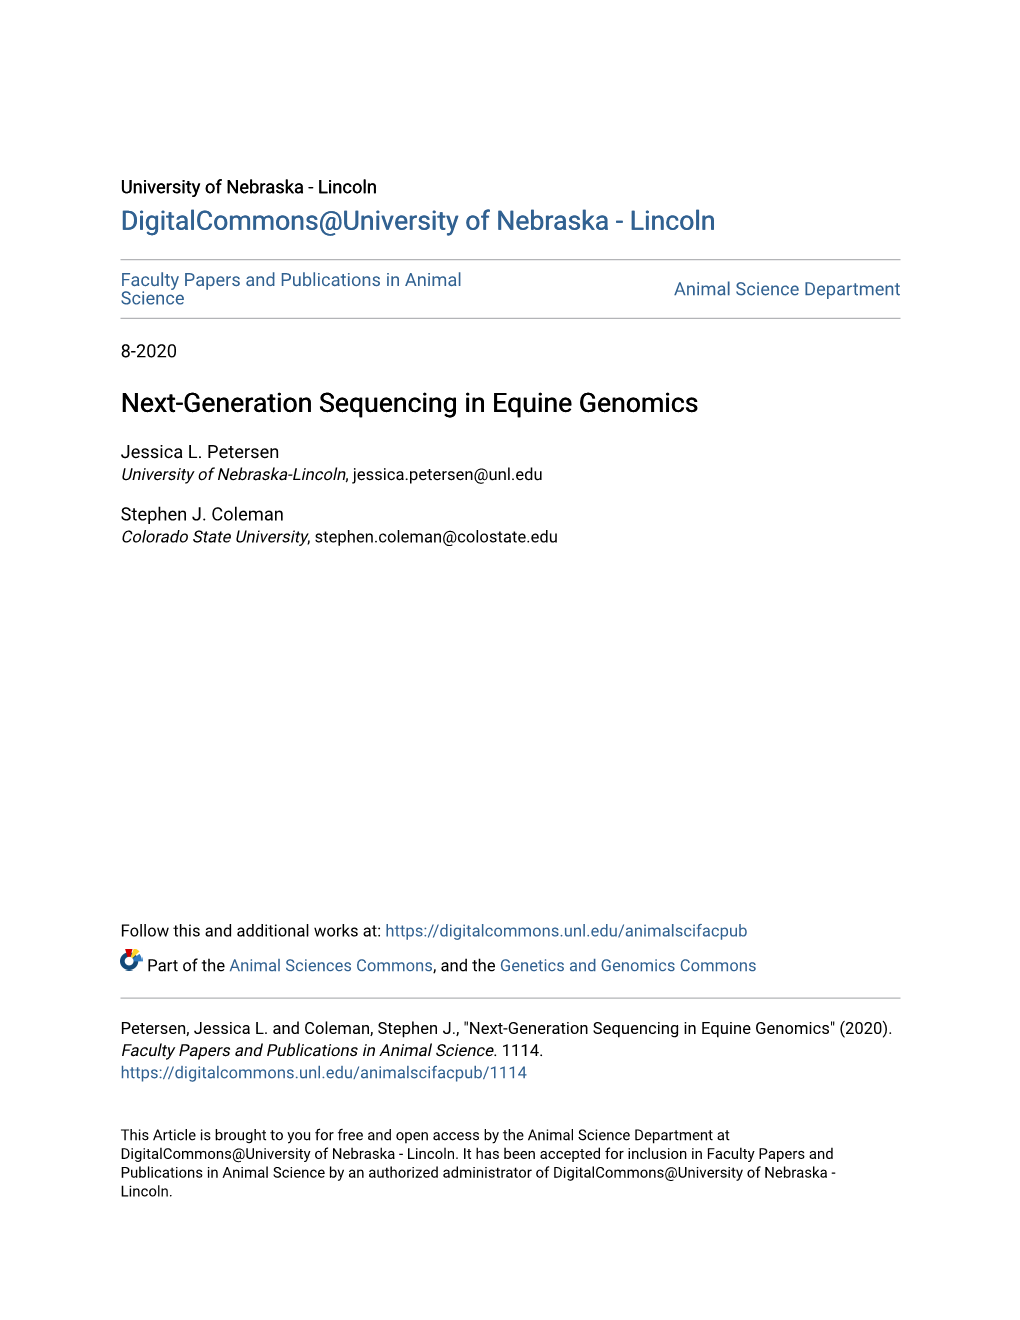 Next-Generation Sequencing in Equine Genomics